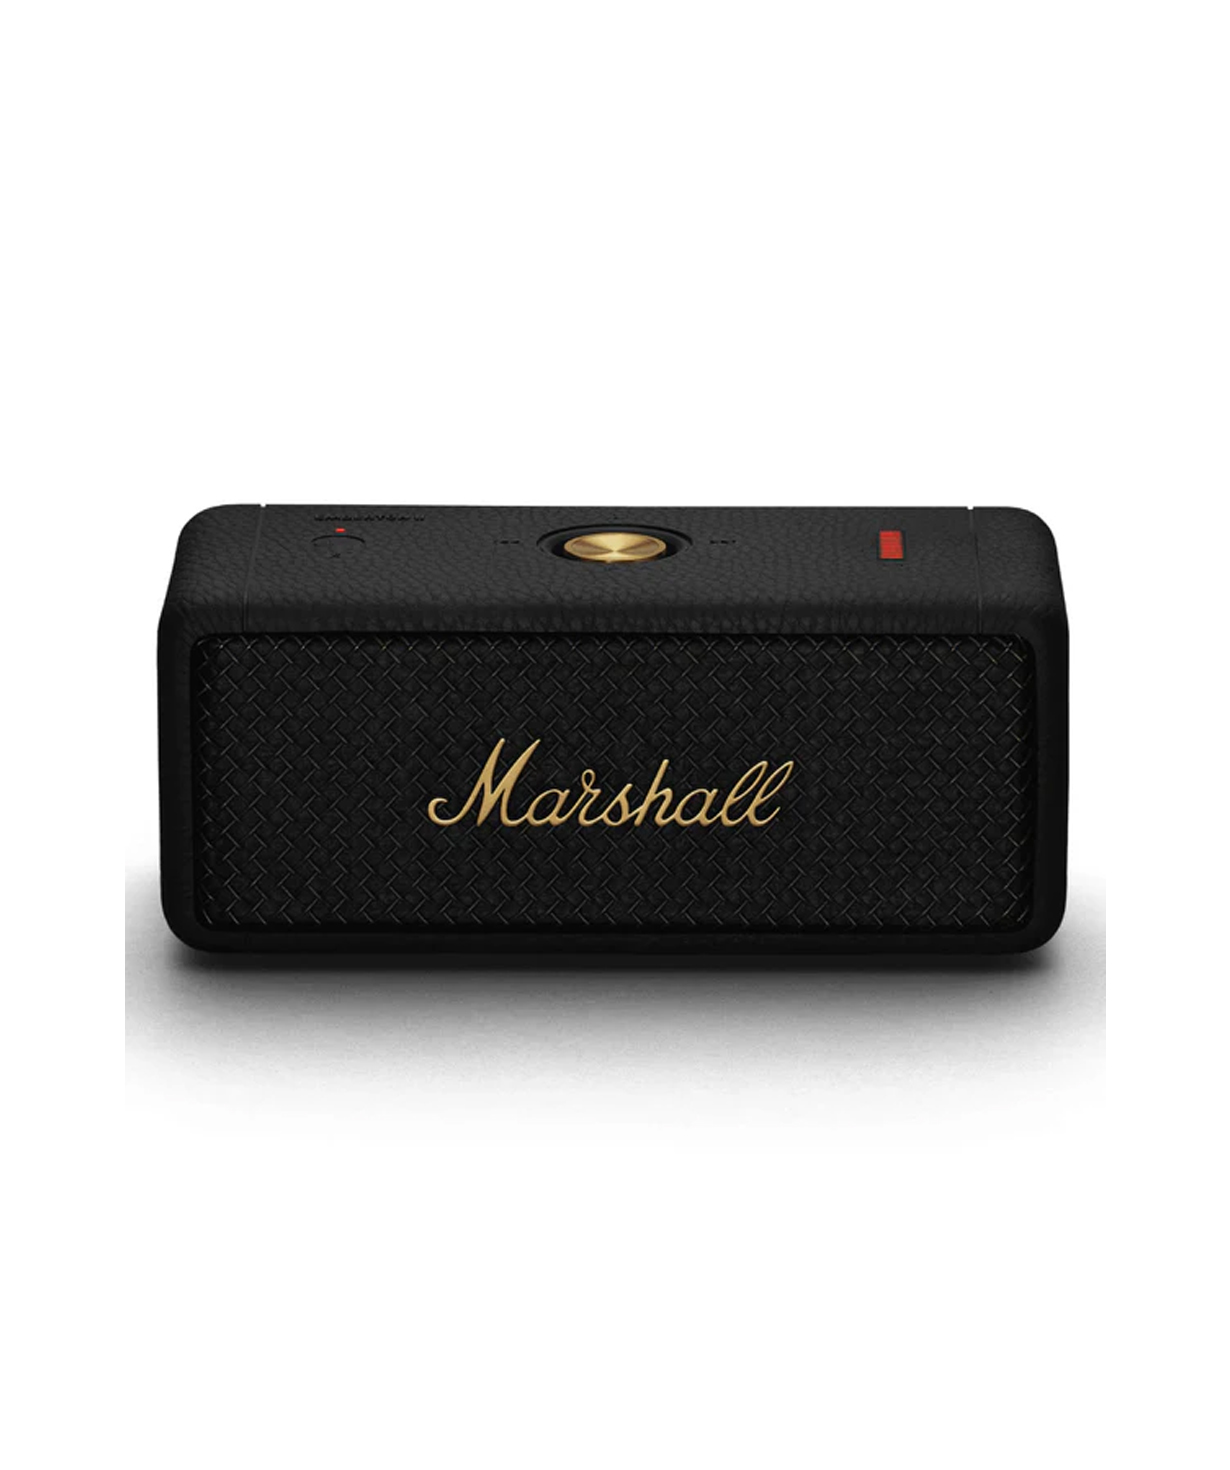 Speaker Marshall Emberton II (Bluetooth 5.1, 87 dB, 20W)